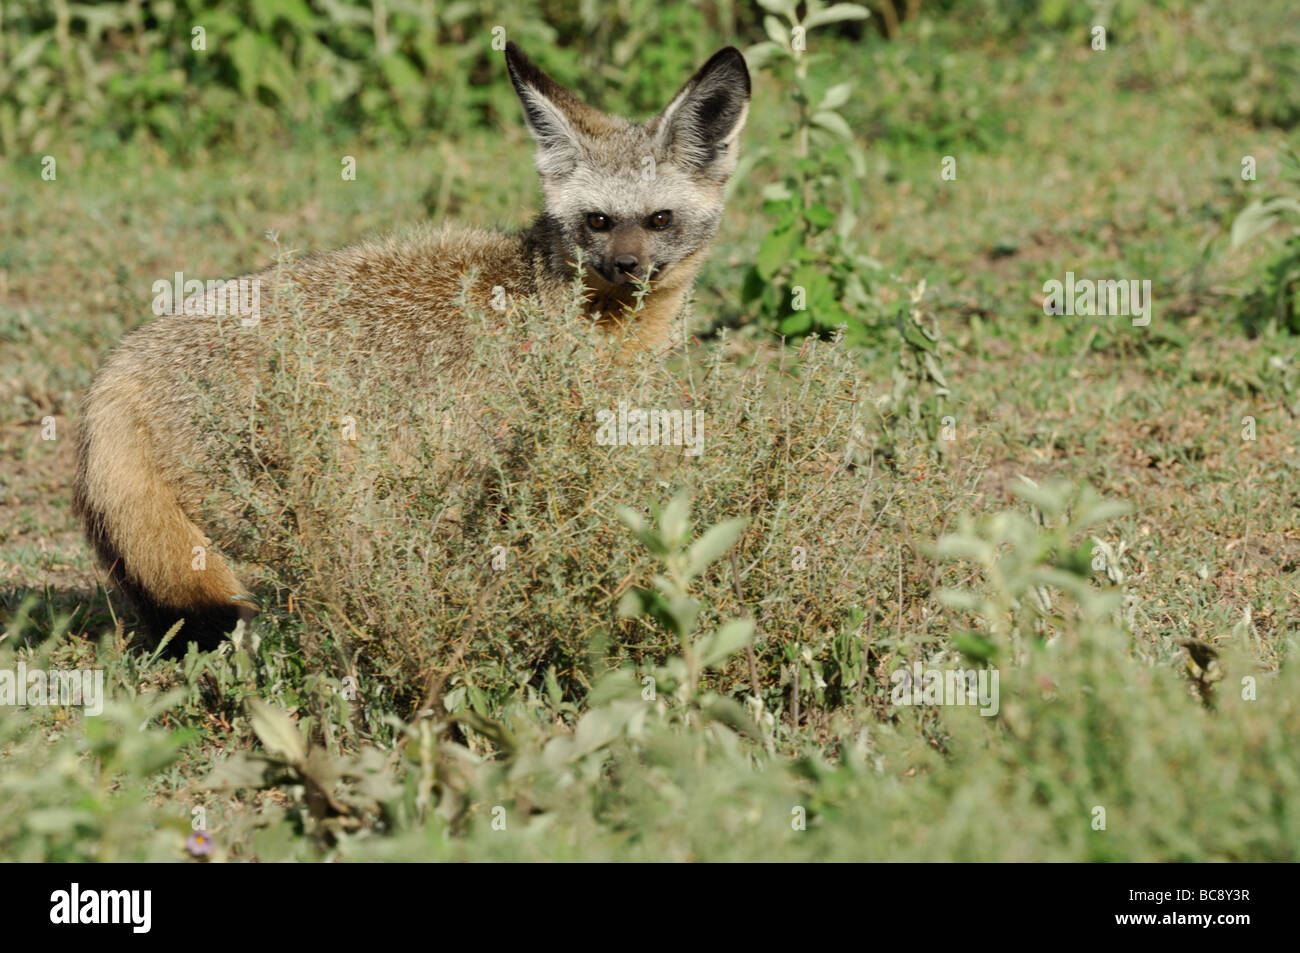 Stock Foto von einem Hieb-eared Fuchs peering von hinten Pinsel, Ndutu, Ngorongoro Conservation Area, Tansania, Februar 2009. Stockfoto